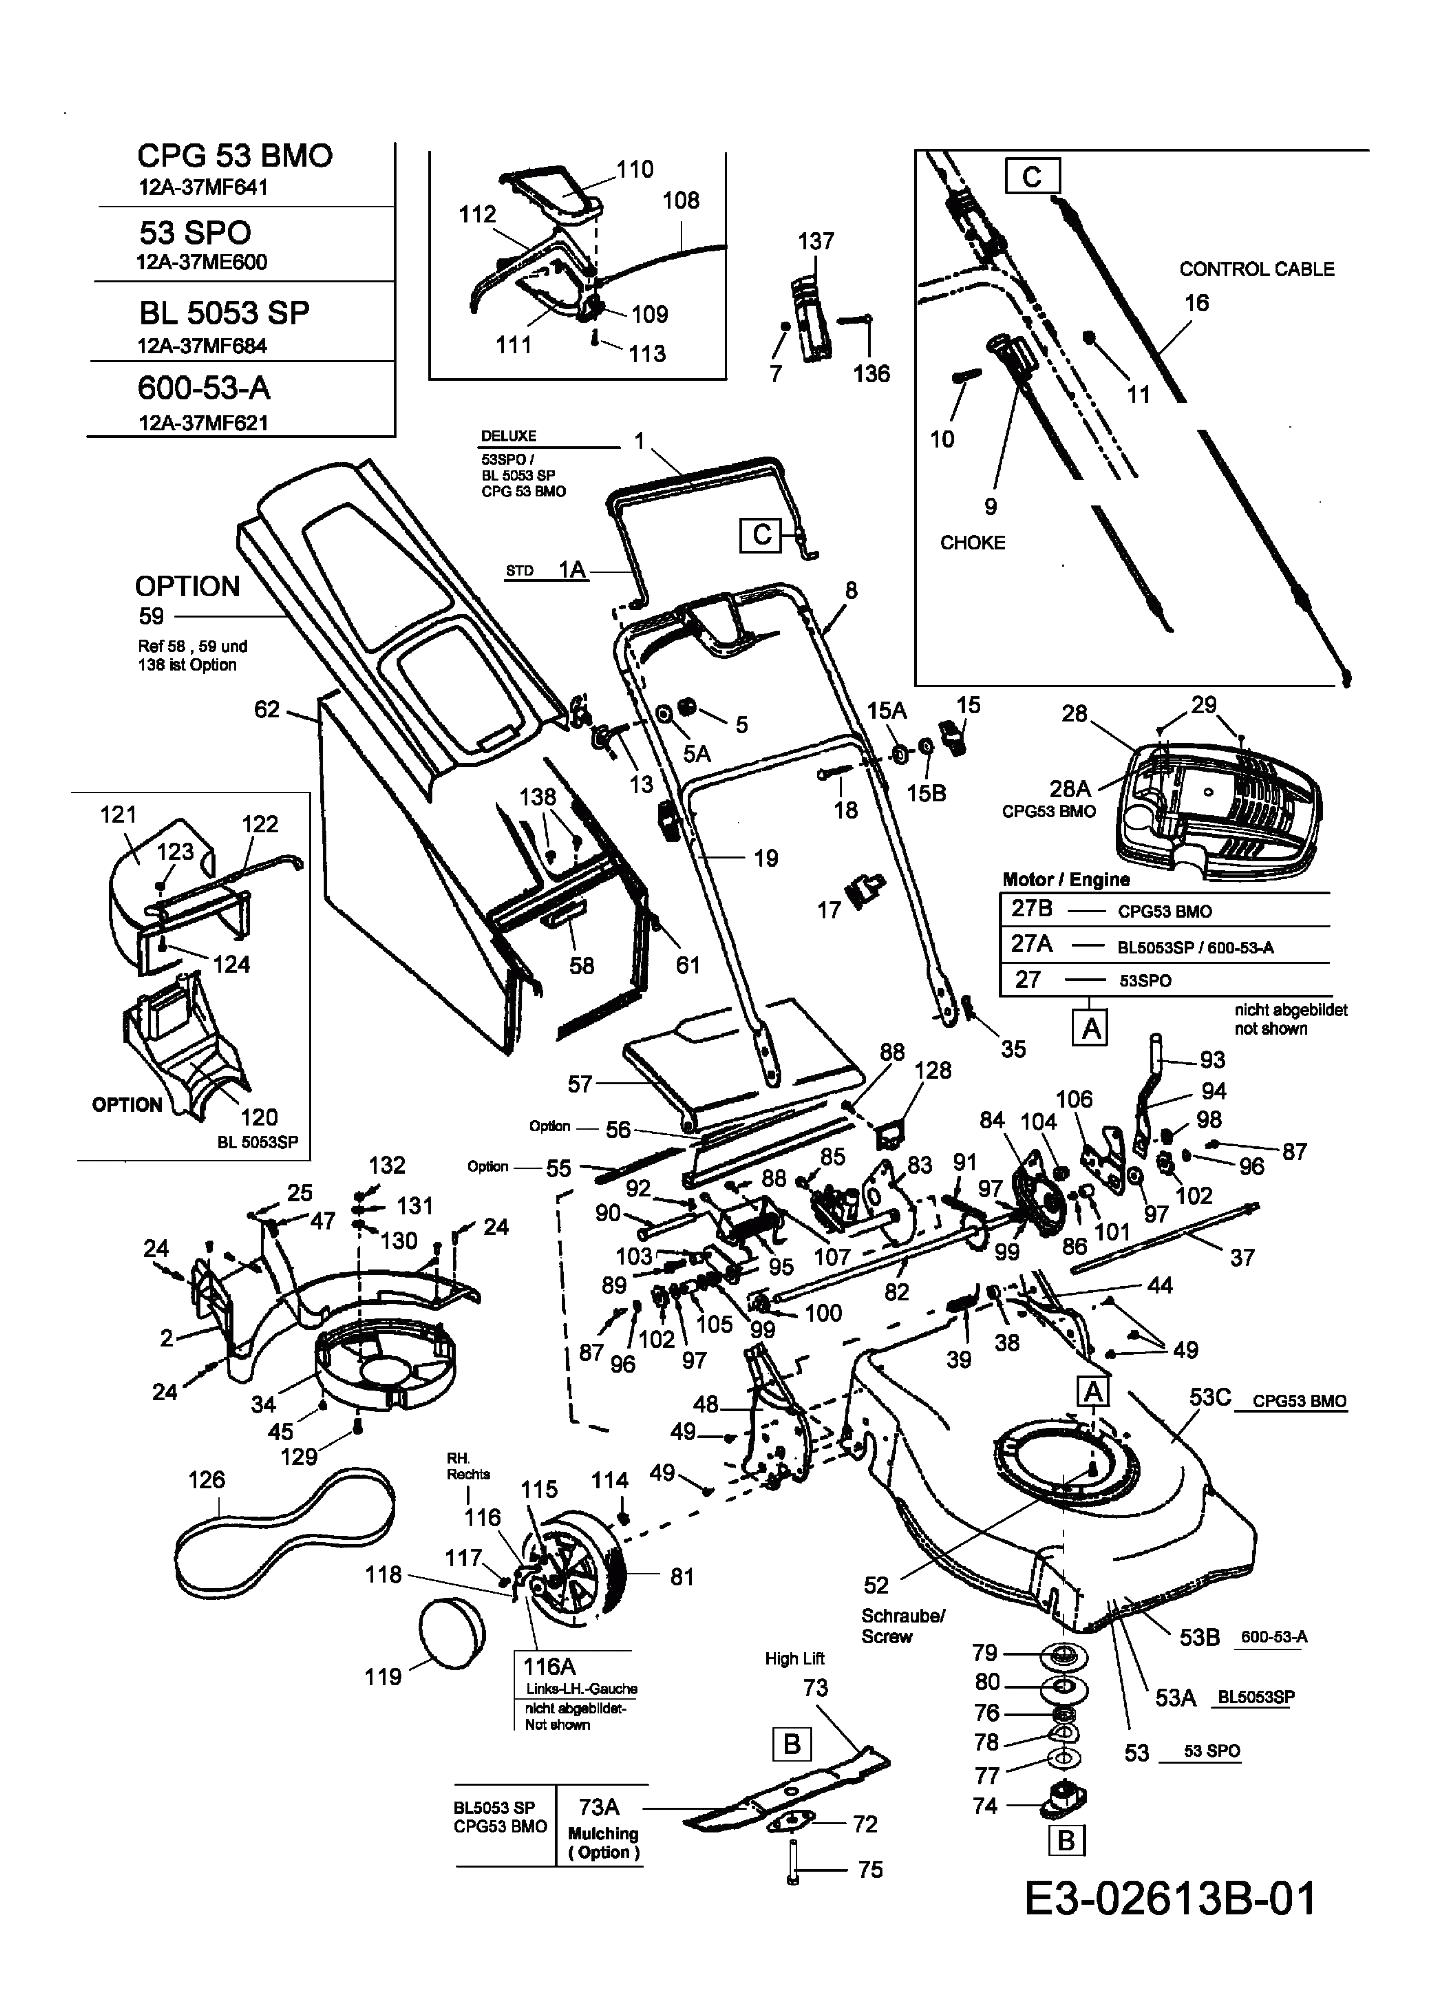 MTD Артикул 12A-37ME600 (год выпуска 2007). Основная деталировка